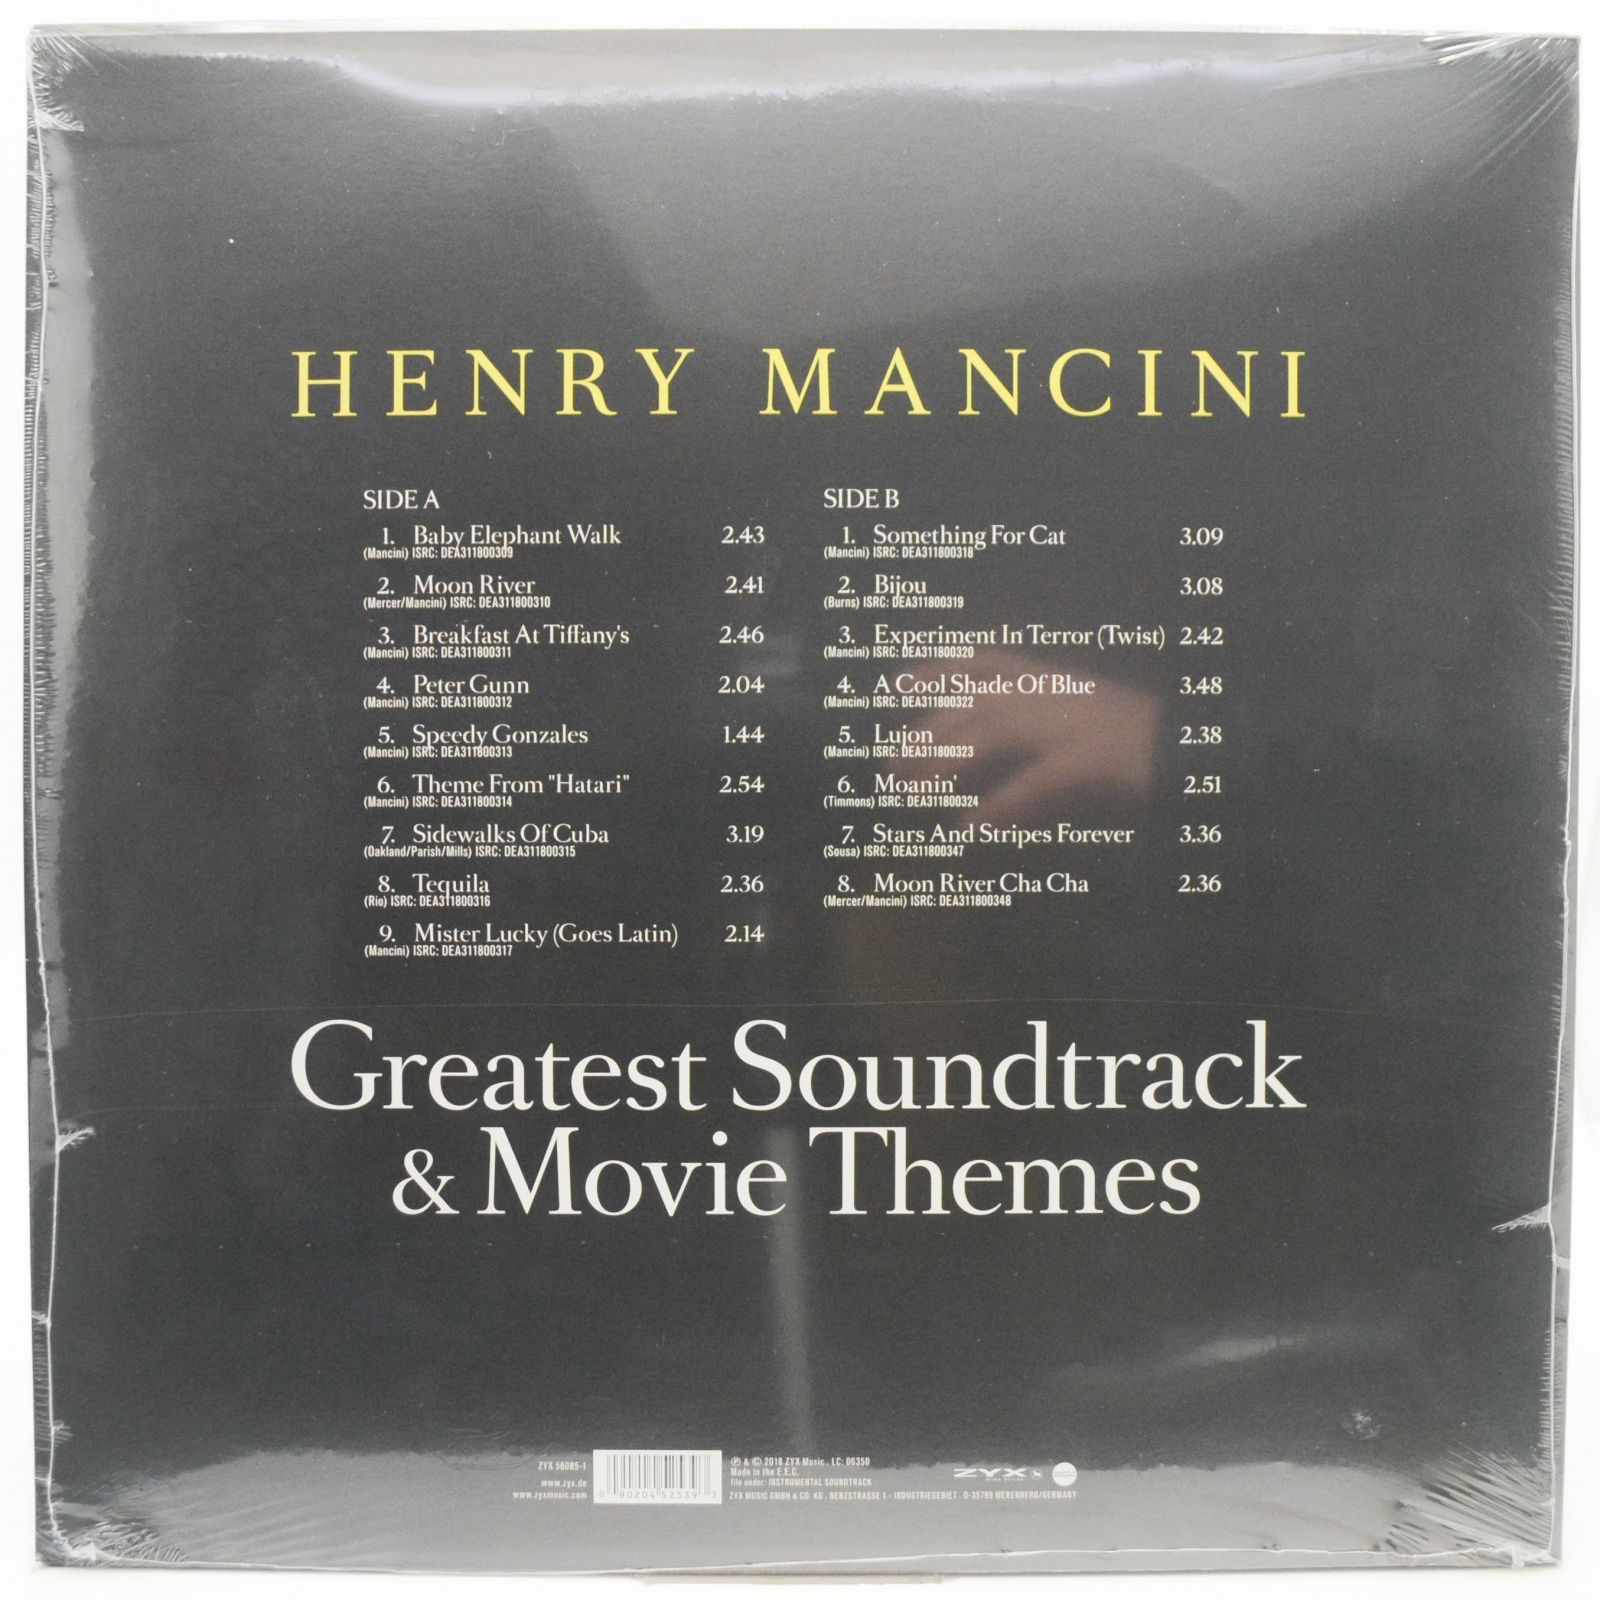 Henry Mancini — Greatest Soundtrack & Movie Themes, 2018